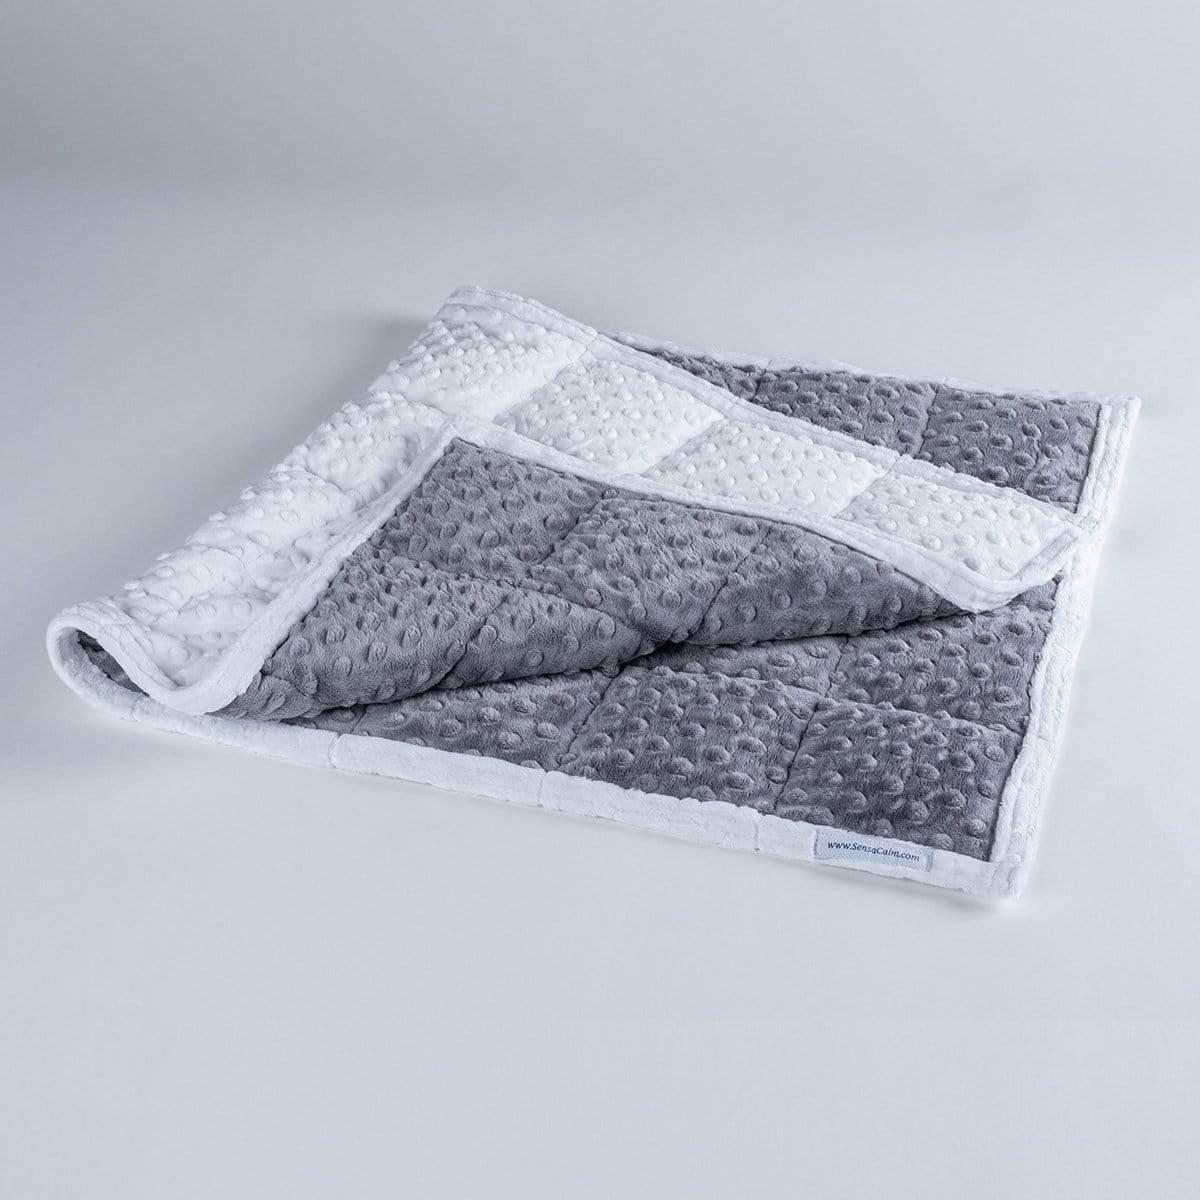 SensaCalm Large Wraps - 5 lb (18" W x 36" L) (Dimple Cuddle) Gray and White